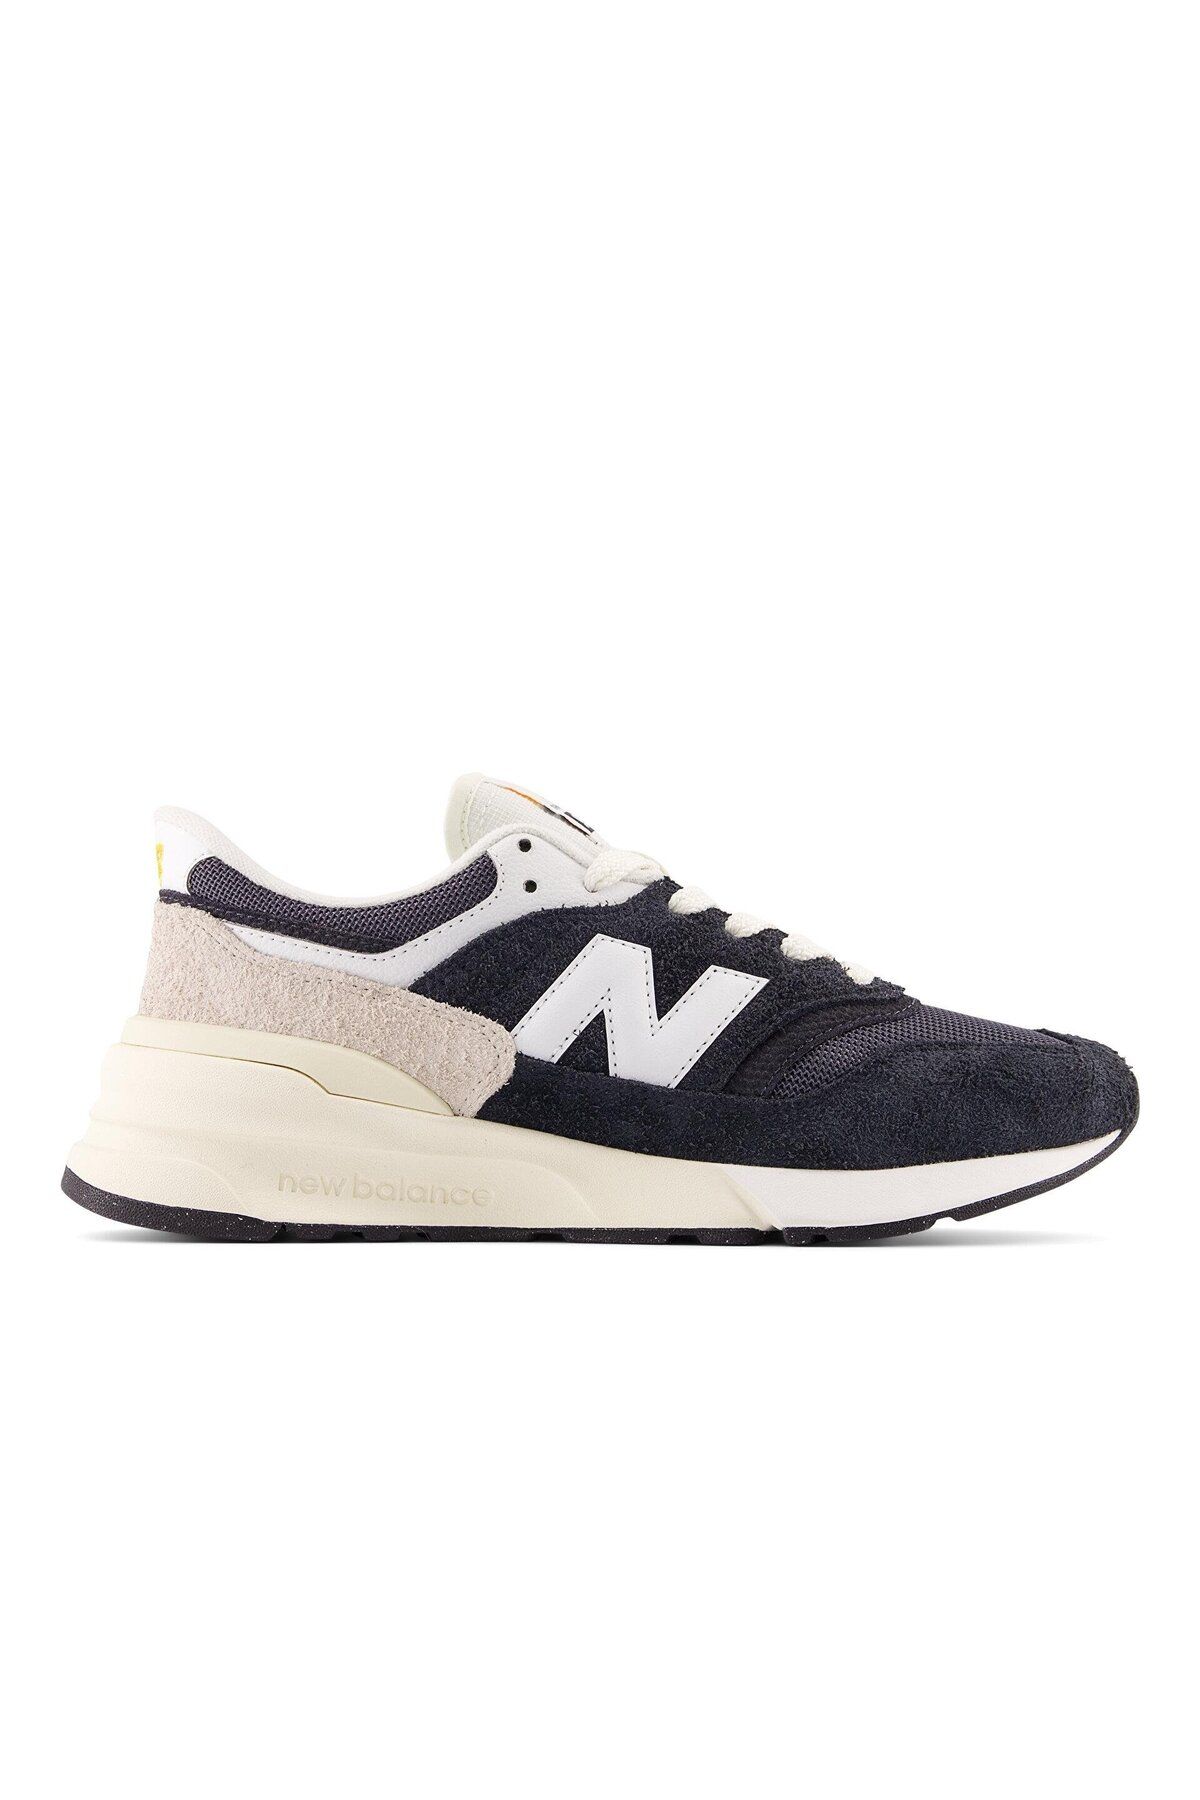 New Balance 997 NB Lifestyle Man Shoes Erkek Sneaker